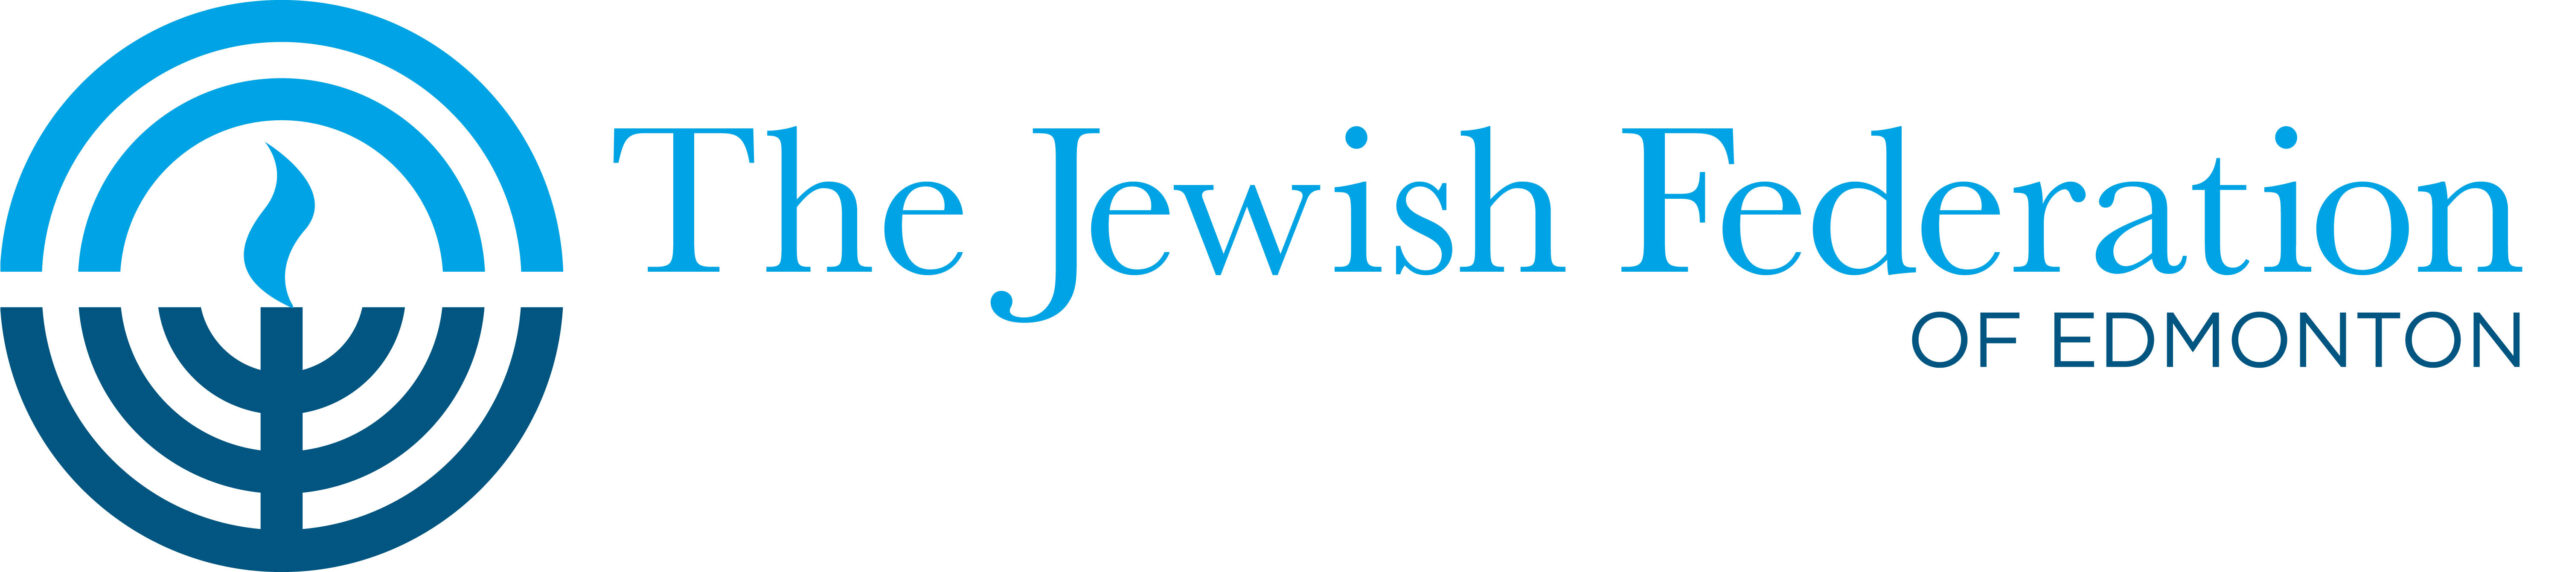 The Jewish Federation (logo)